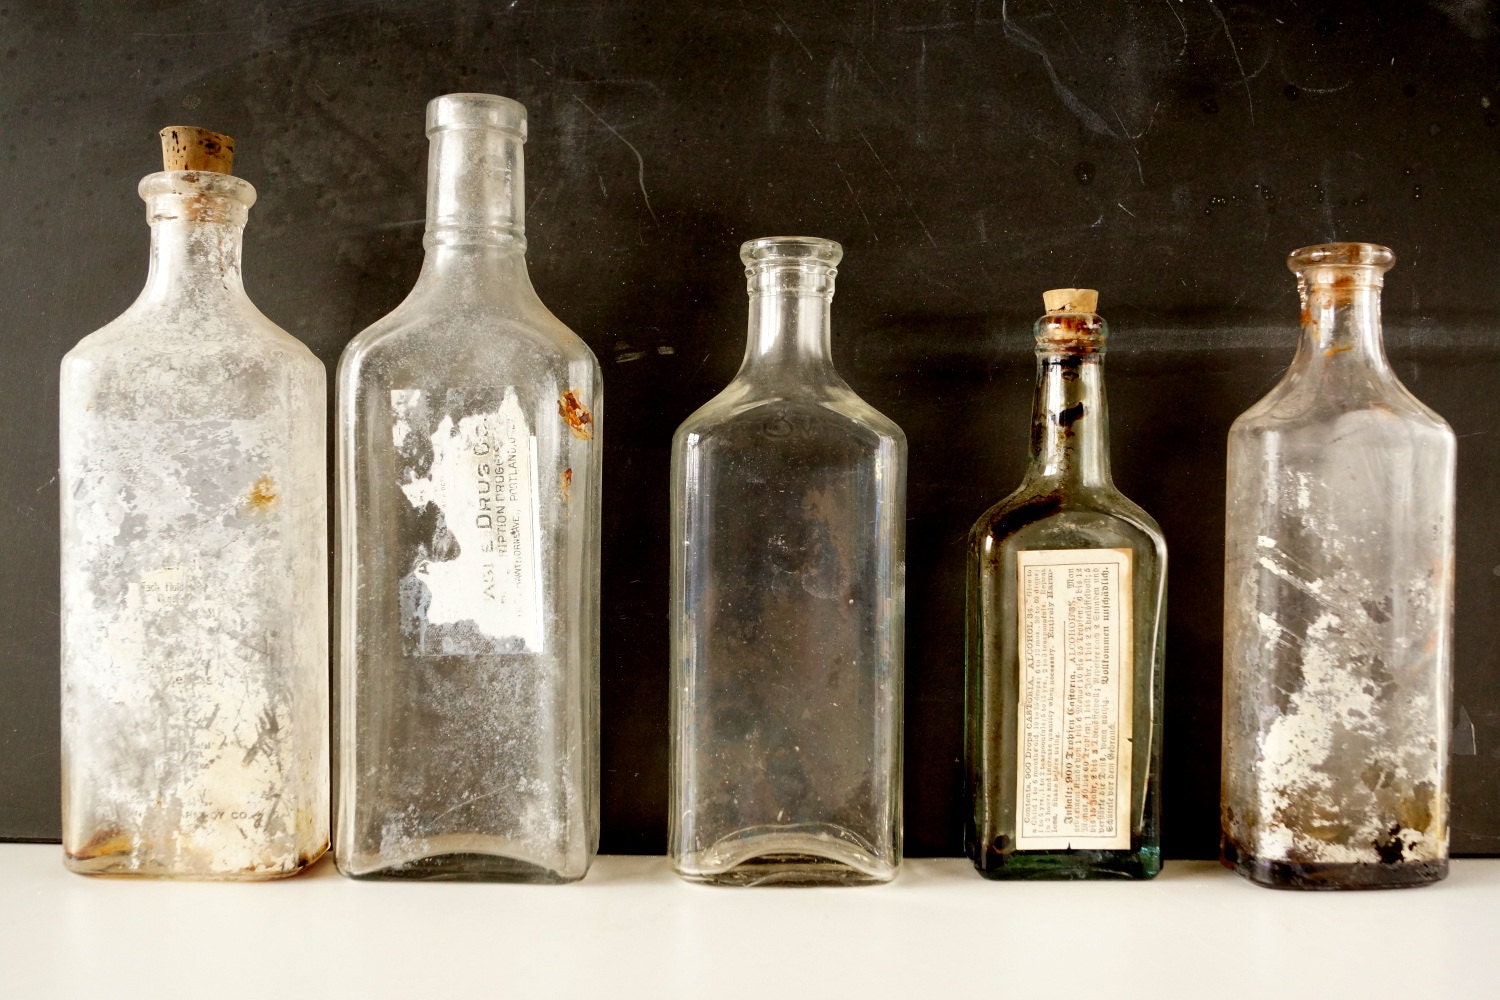 Small Antique Bottle. Медицина Винтаж. Antique Bottle image. Отмыть бутылку внутри